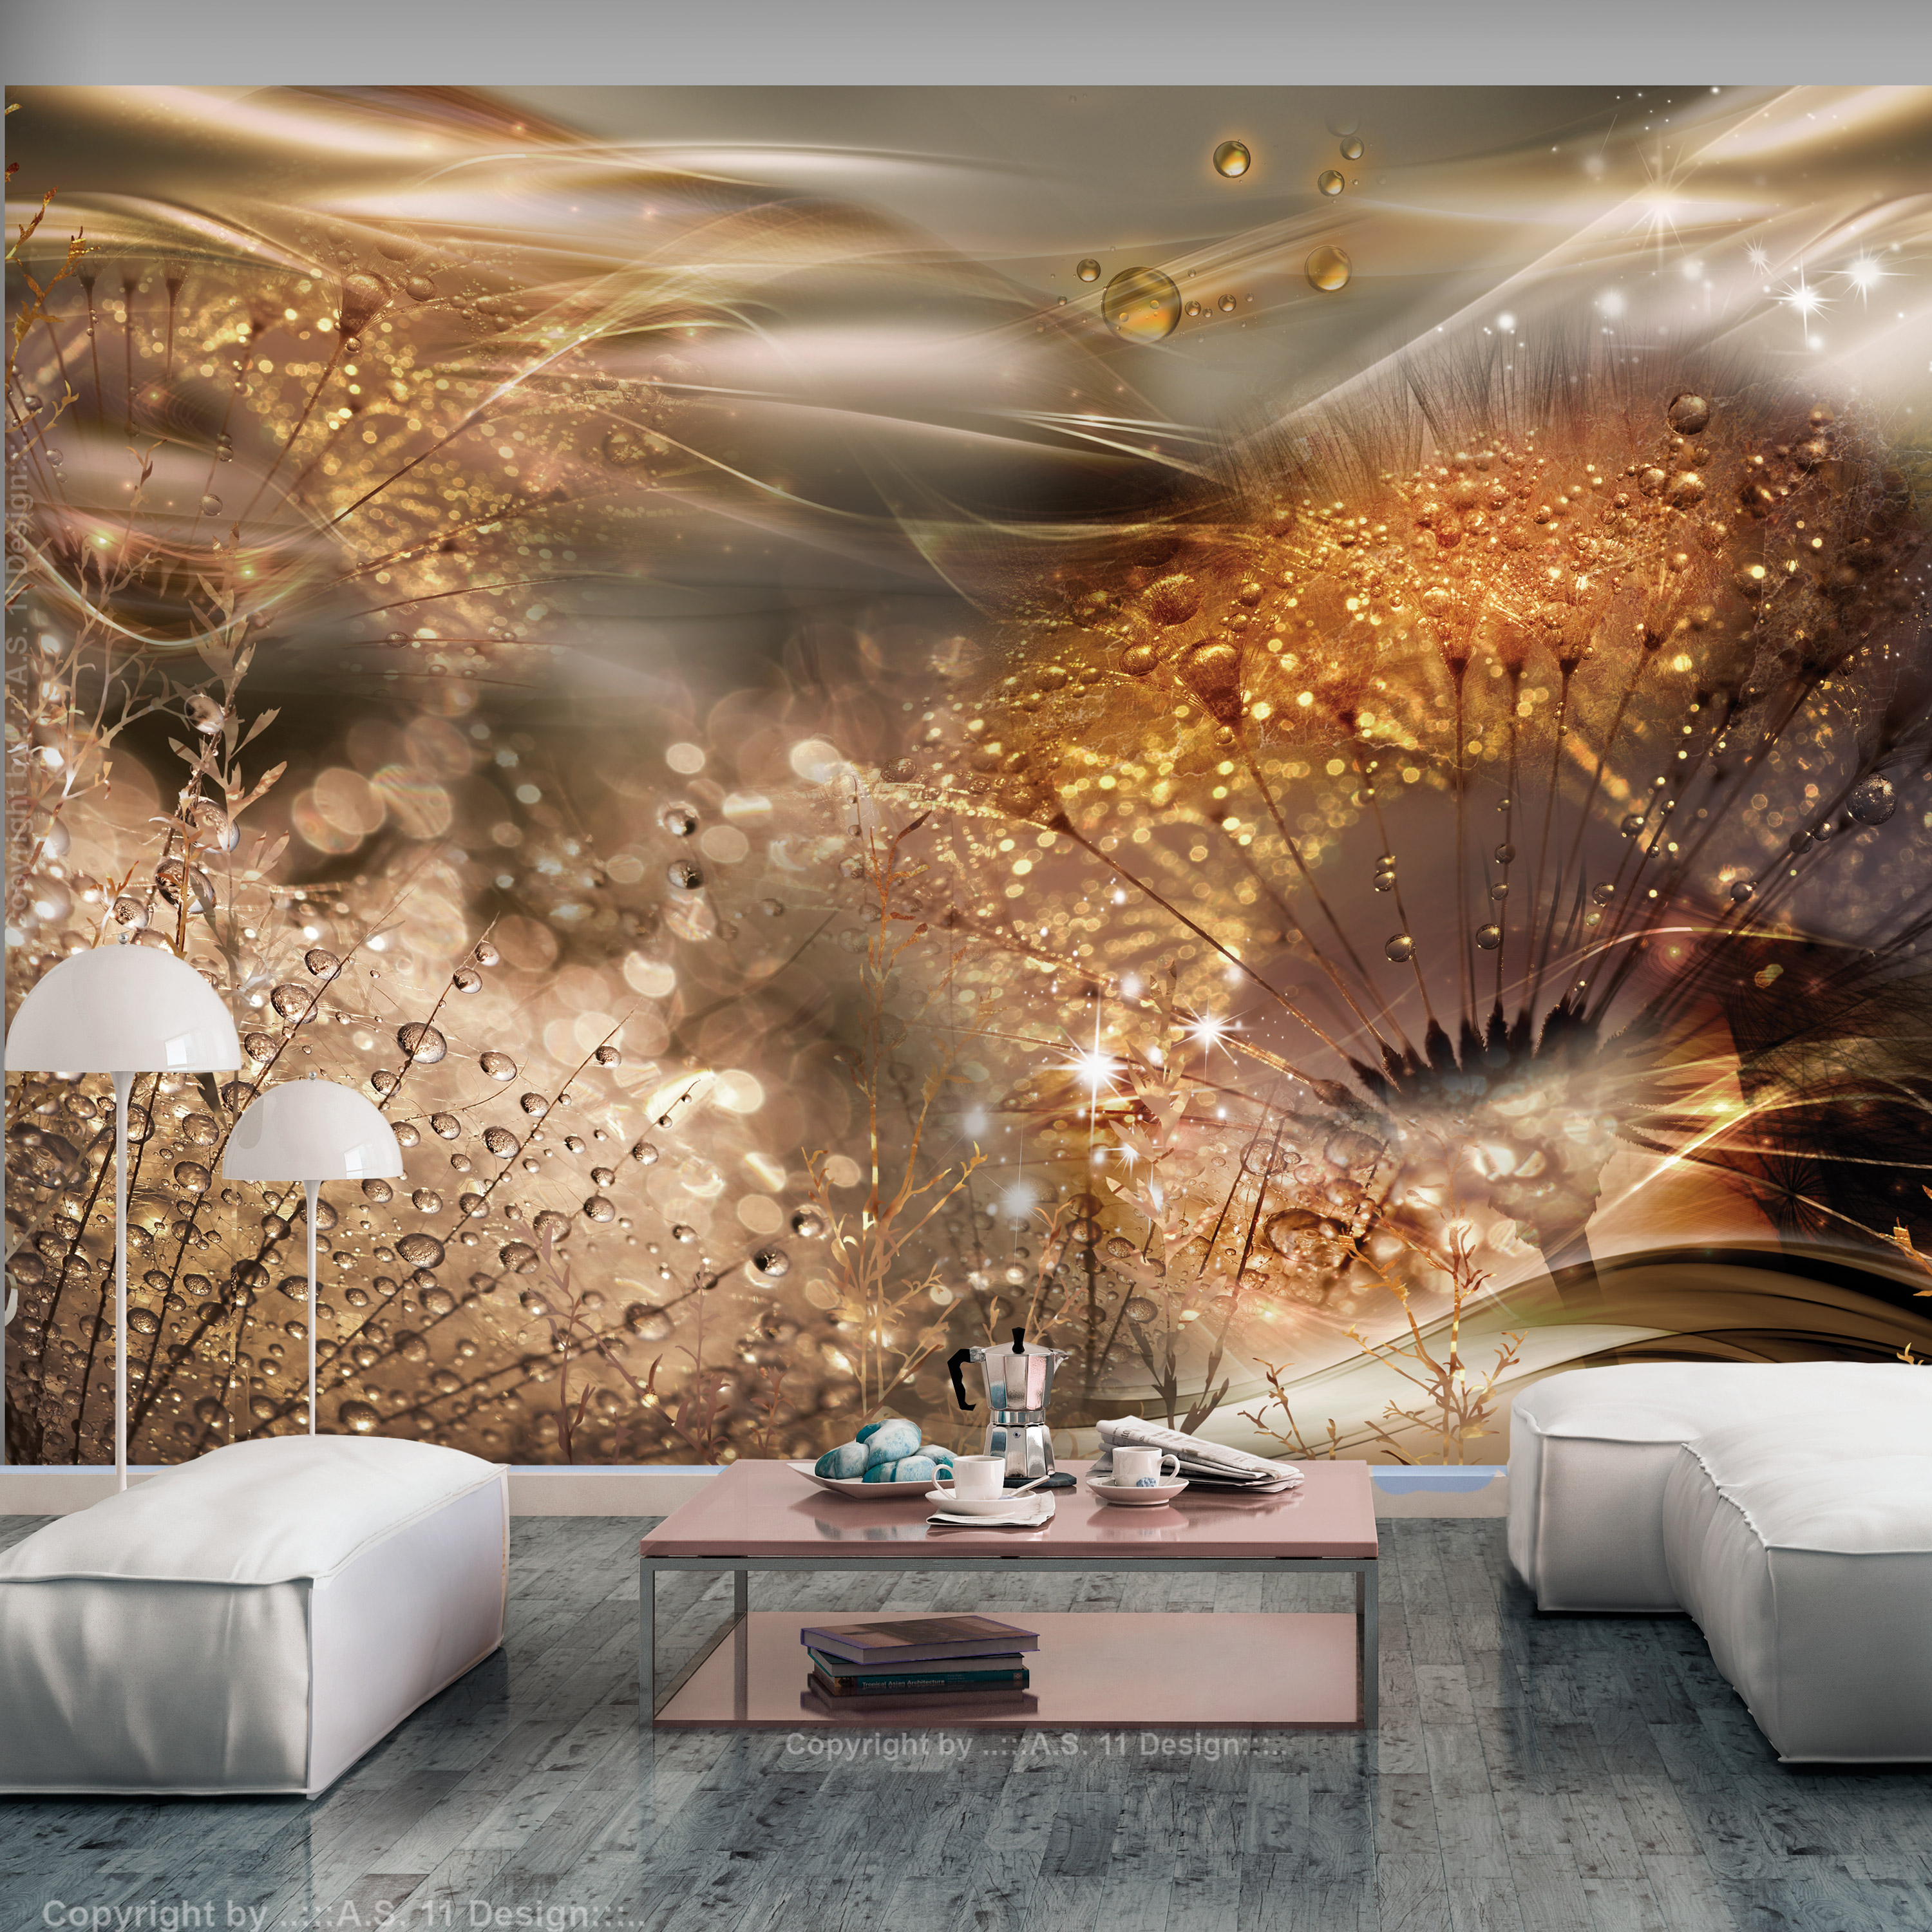 Self-adhesive Wallpaper - Dandelions' World (Gold) - 245x175